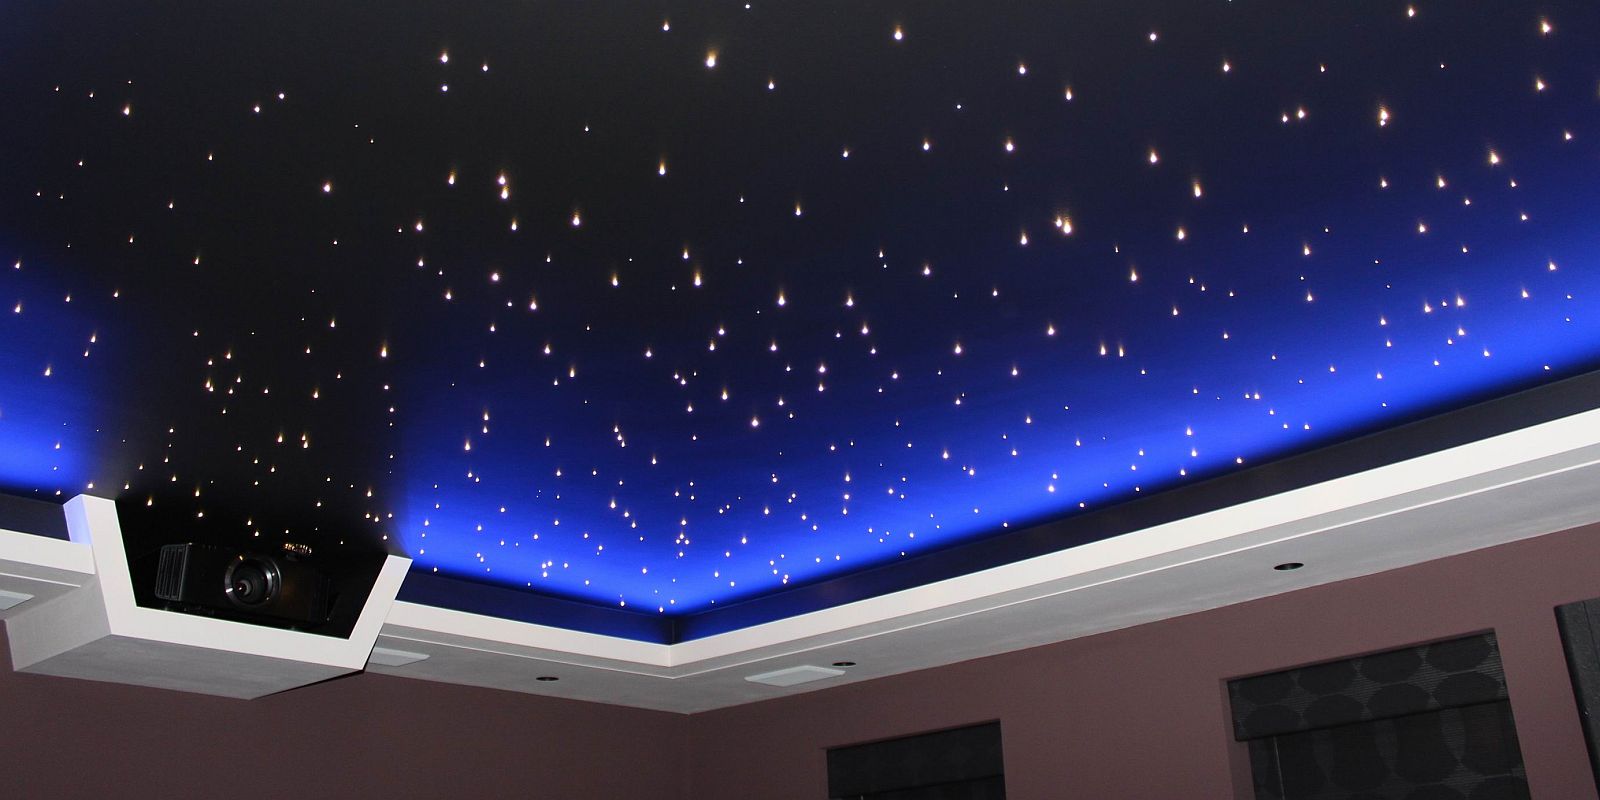 stretch ceiling barrisol star ceiling stars dubai bedroom 